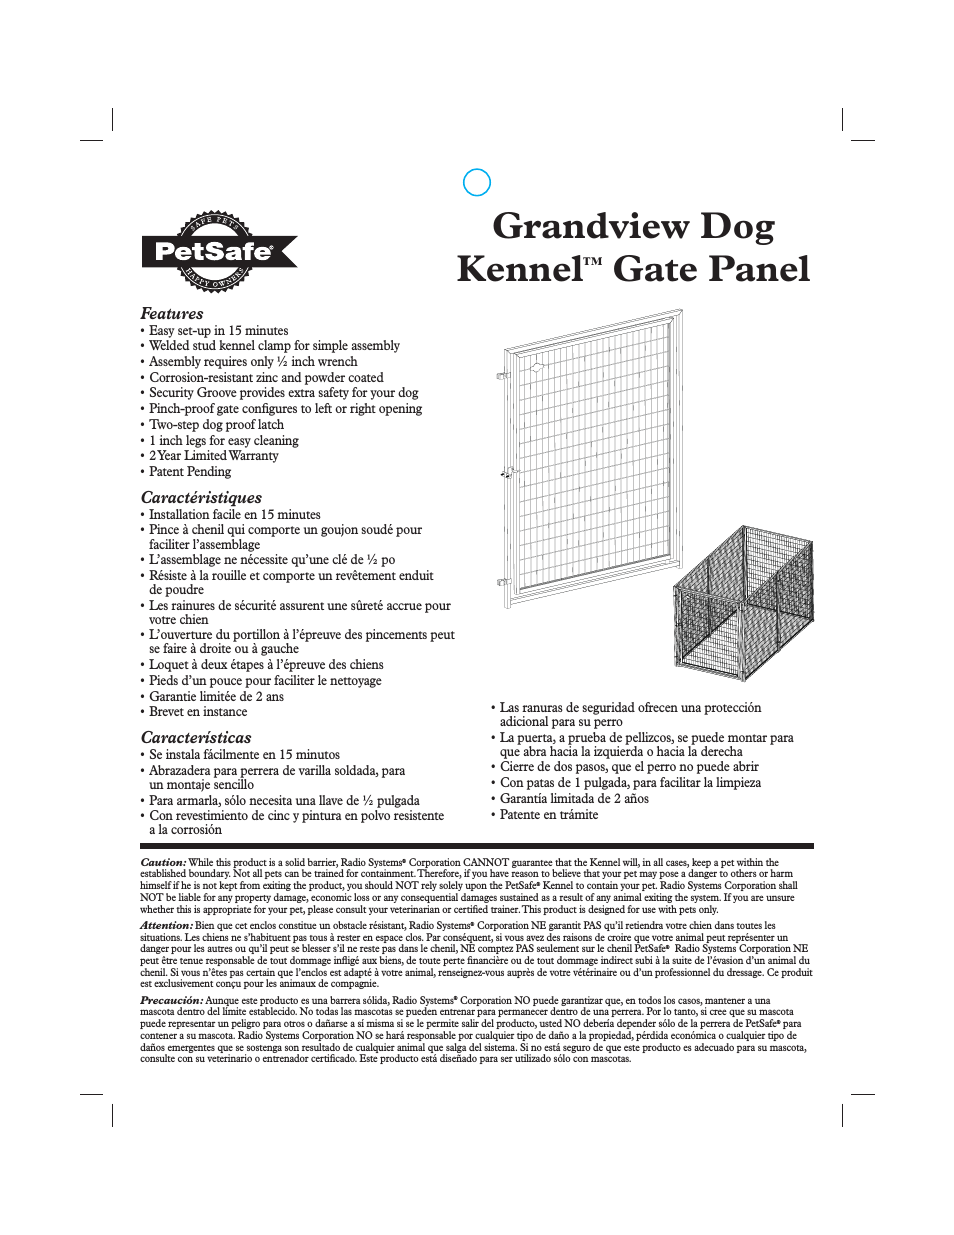 Grandview Dog Kennel Gate